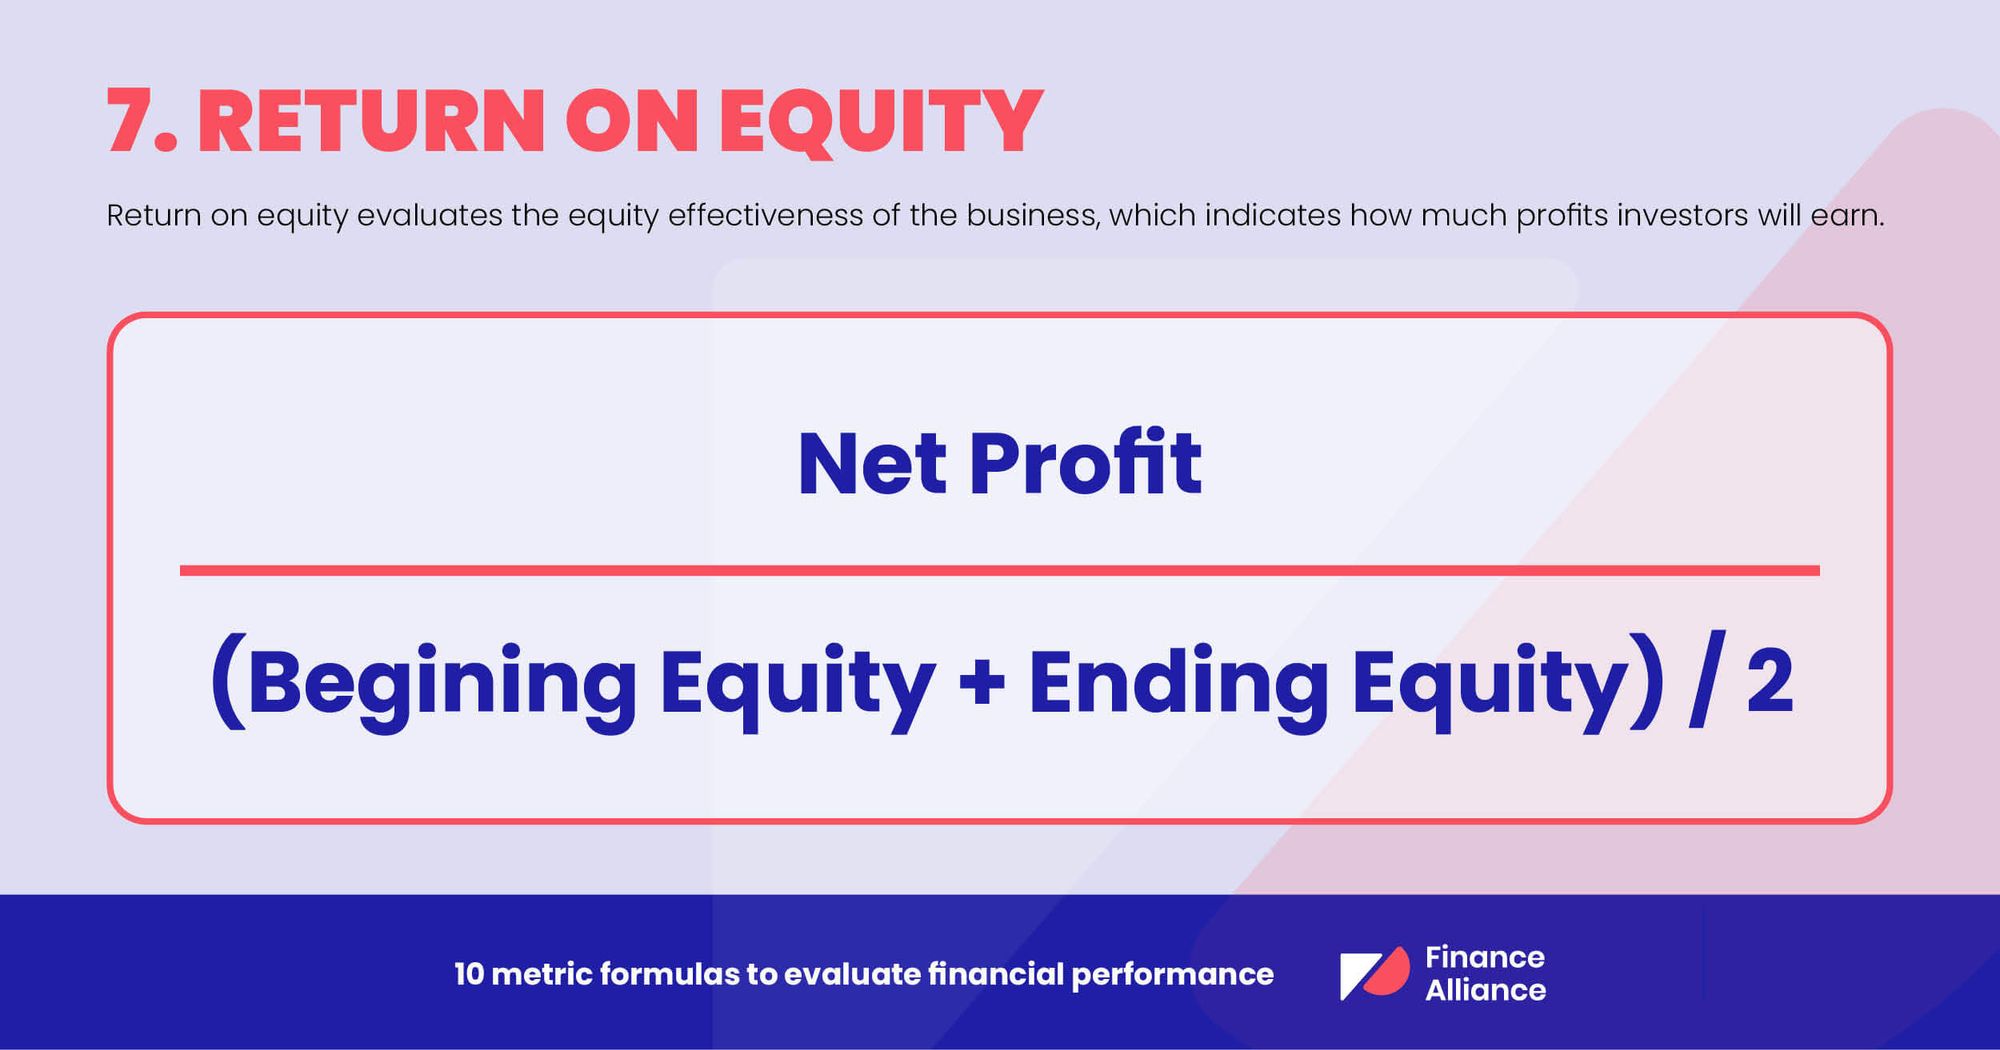 Financial performance analysis metric 7 - Return on equity